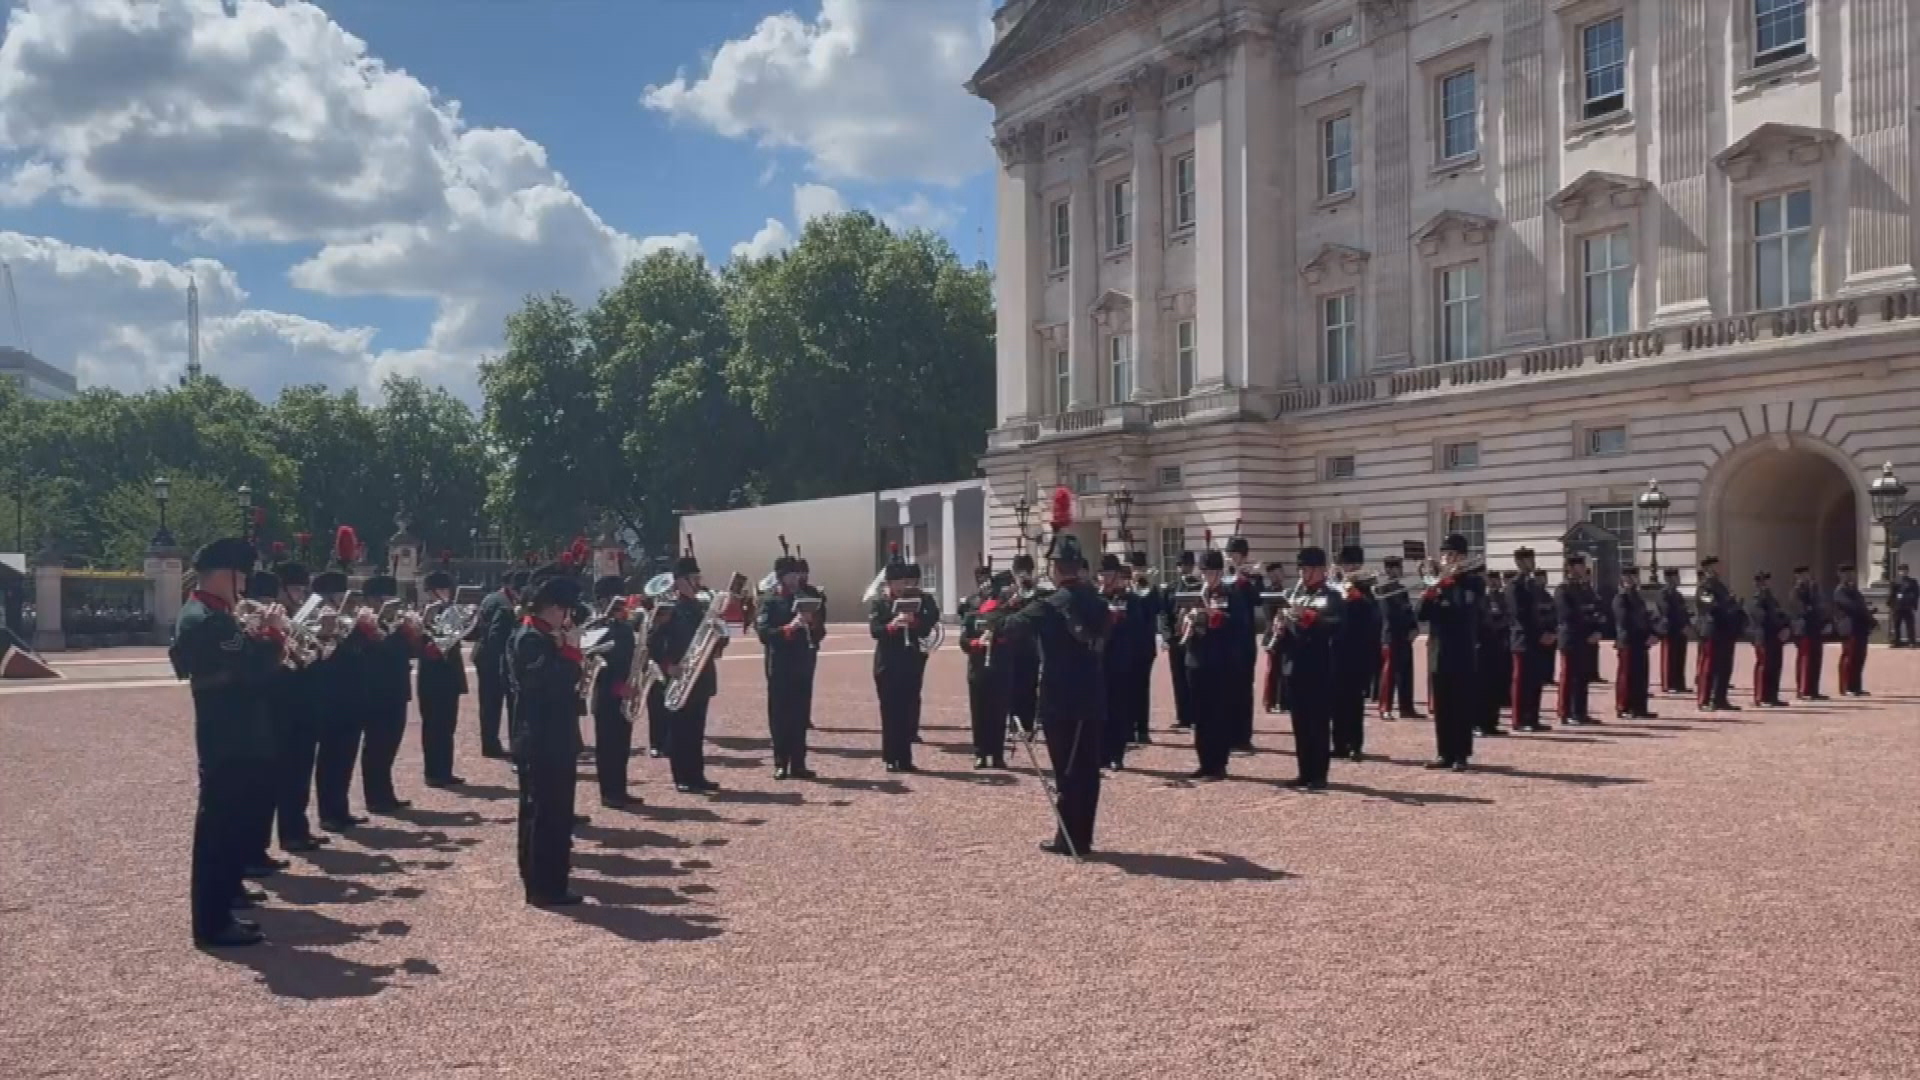 Buckingham Palace military band plays Taylor Swift hit